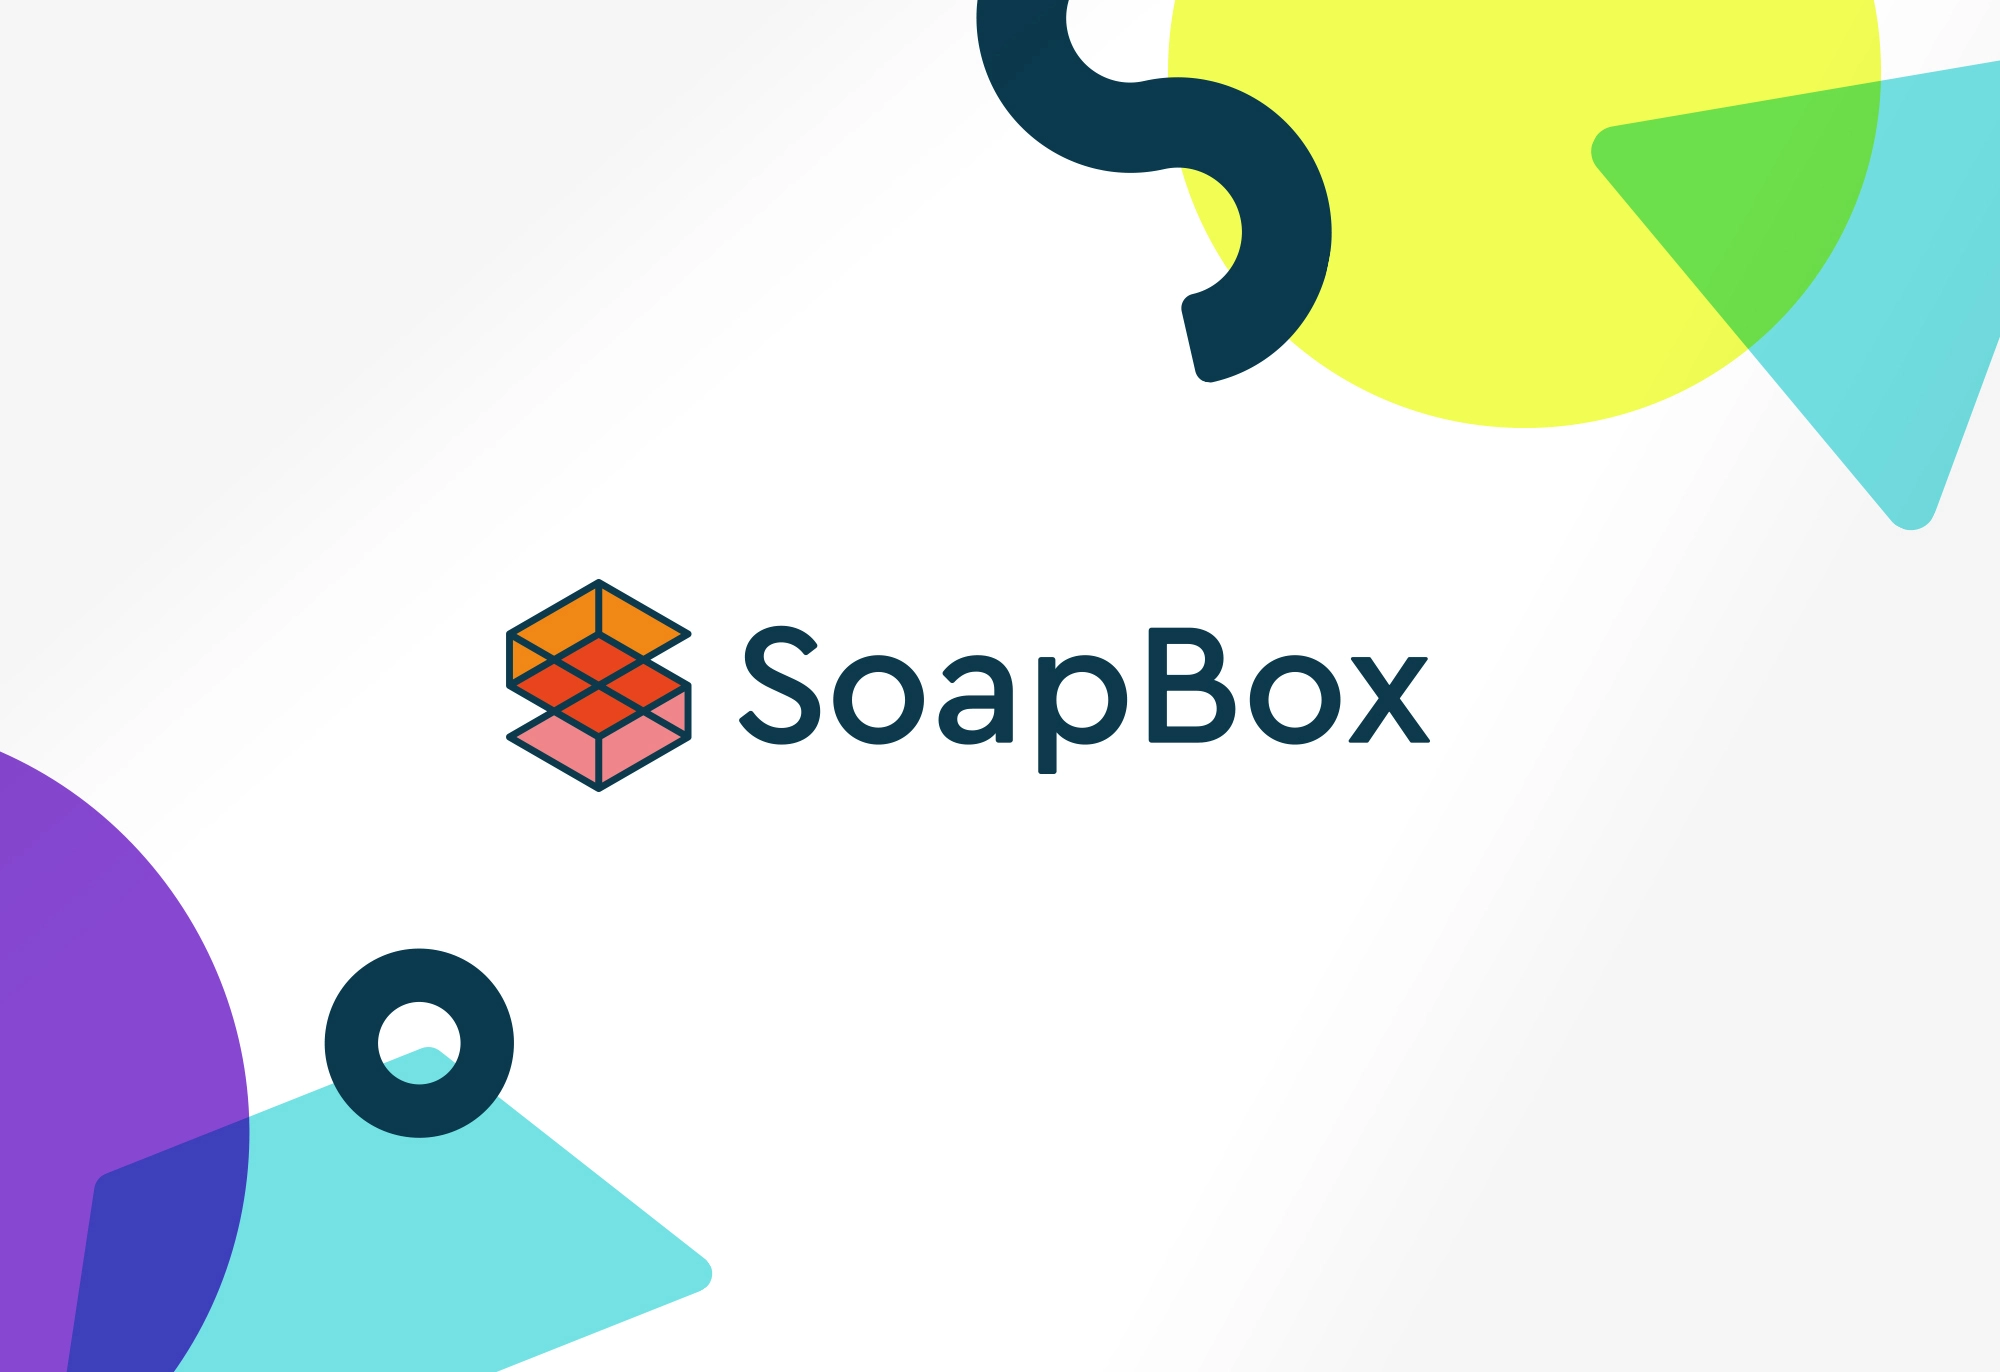 the newly rebranded SoapBox logo designed by Aggie Bainbrige